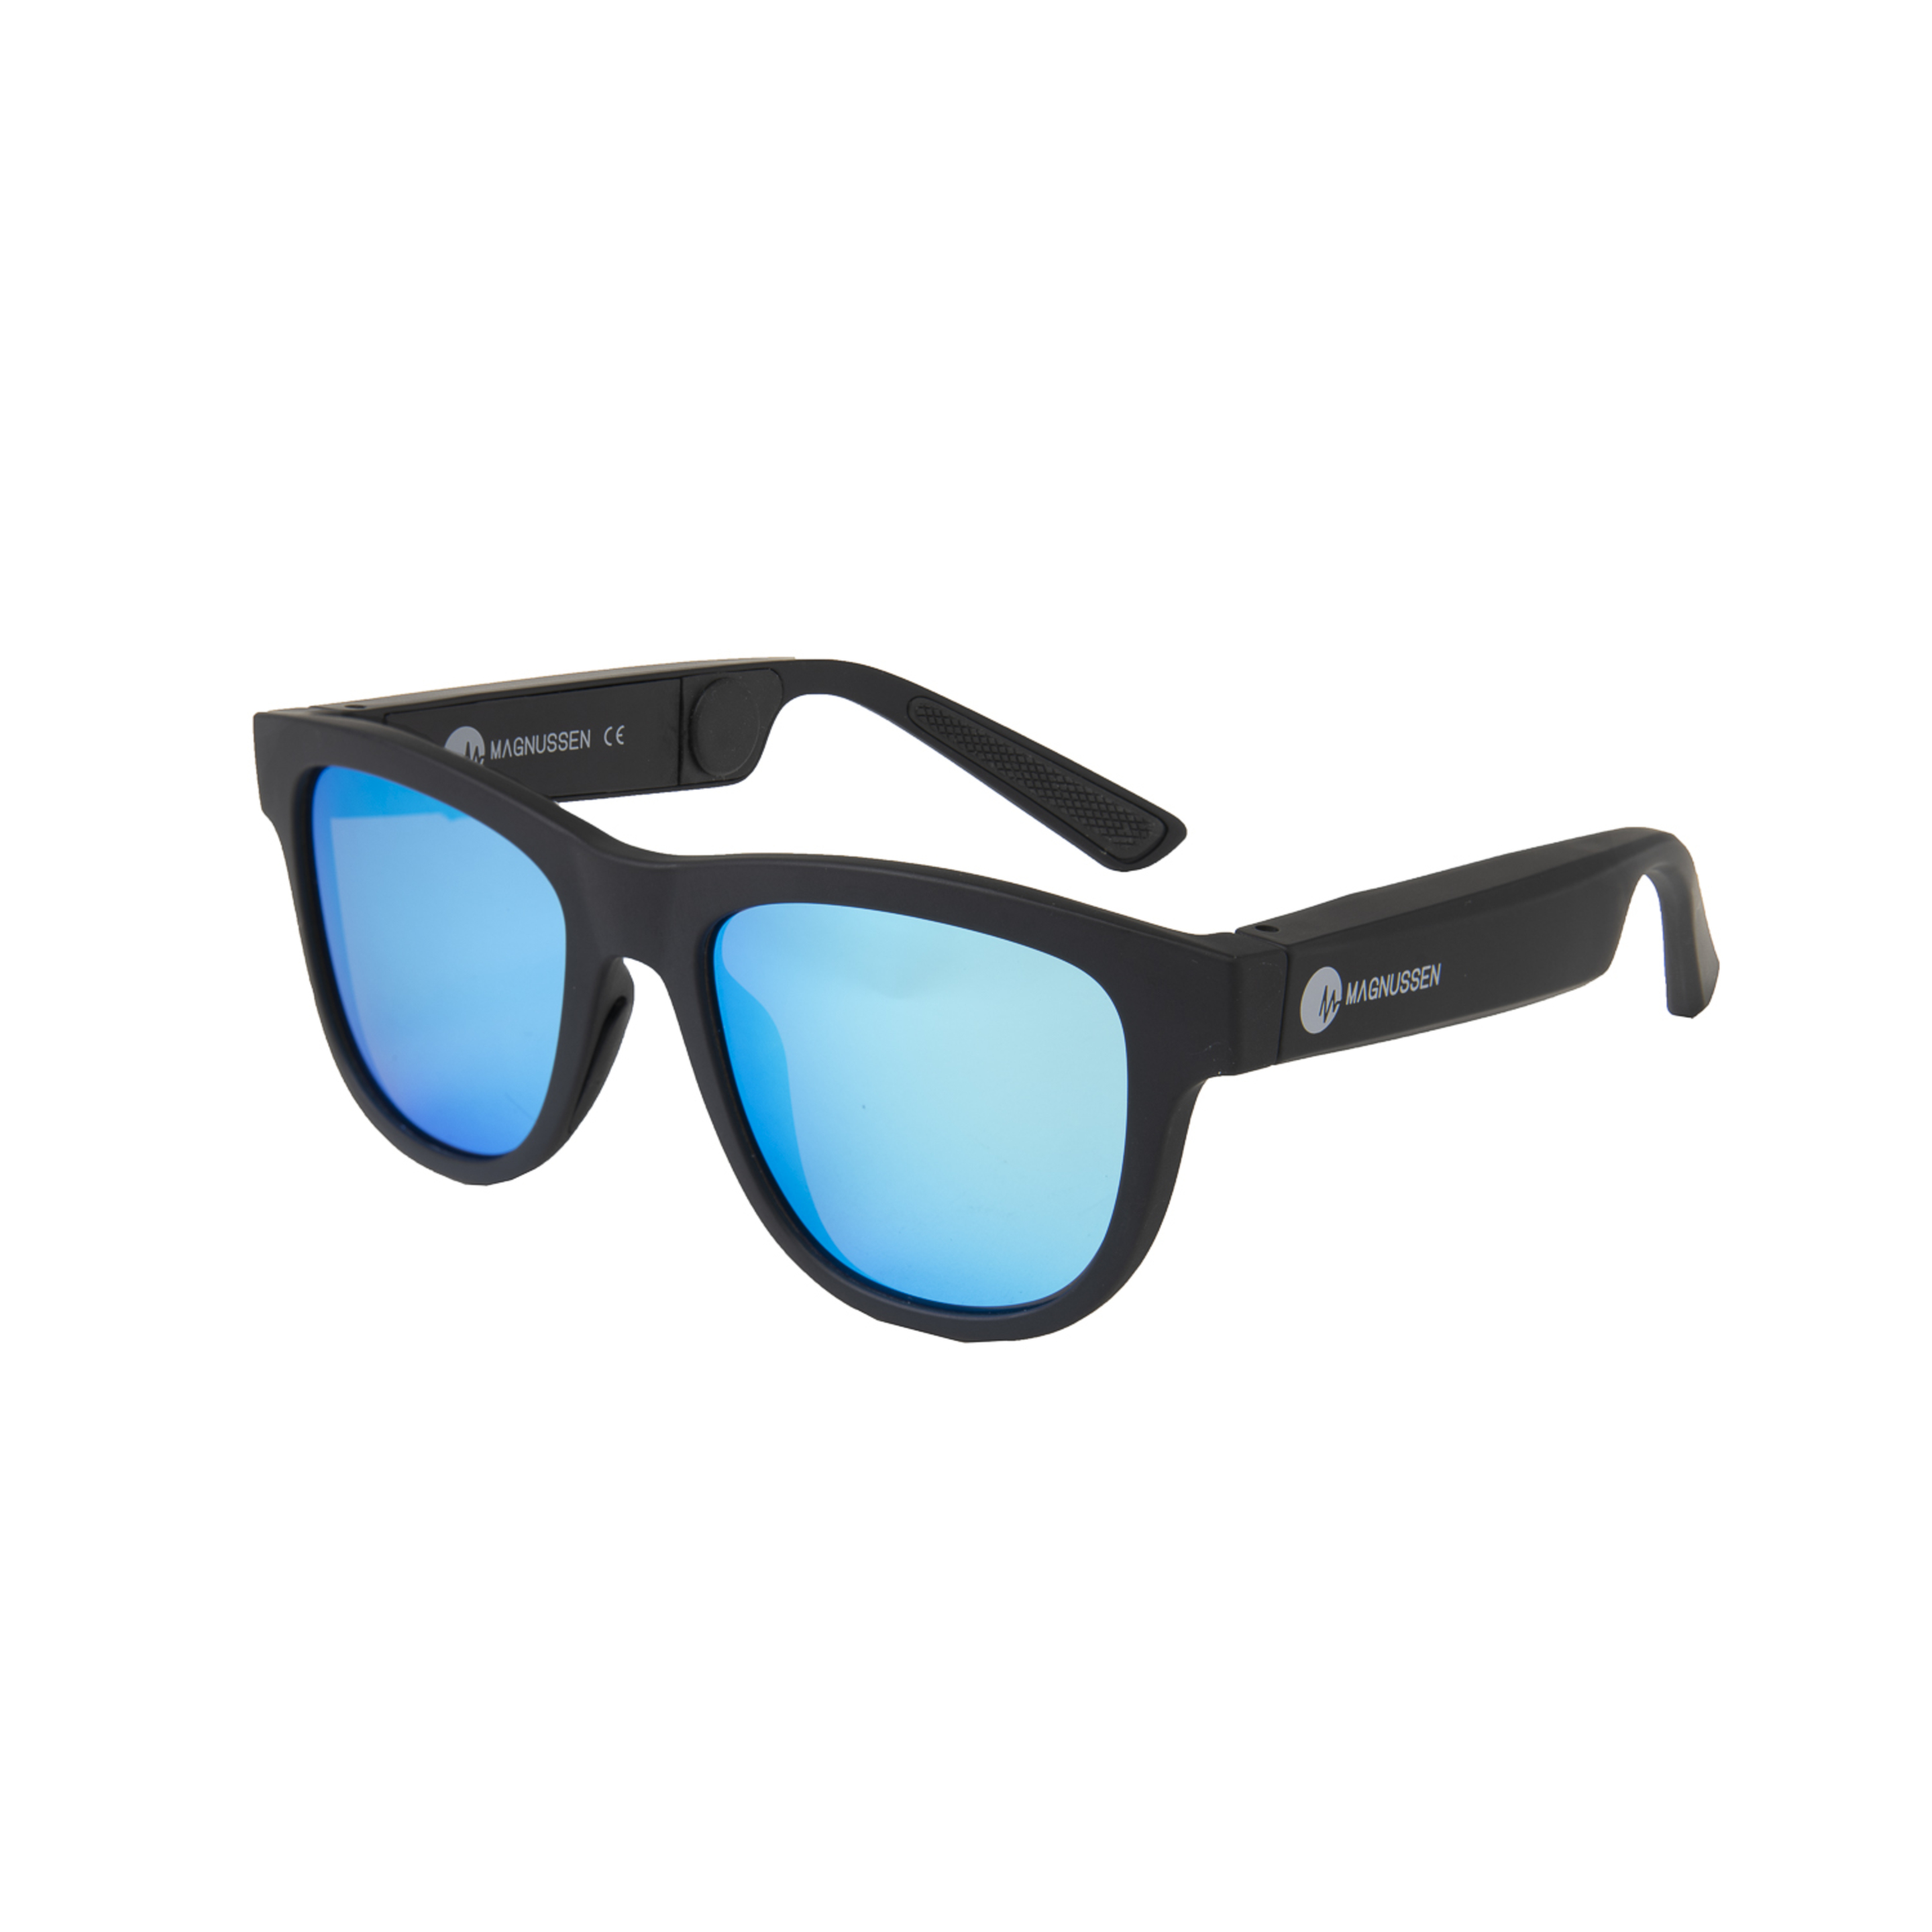 Óculos De Sol Magnussen G1 Bluetooth - negro-azul - 